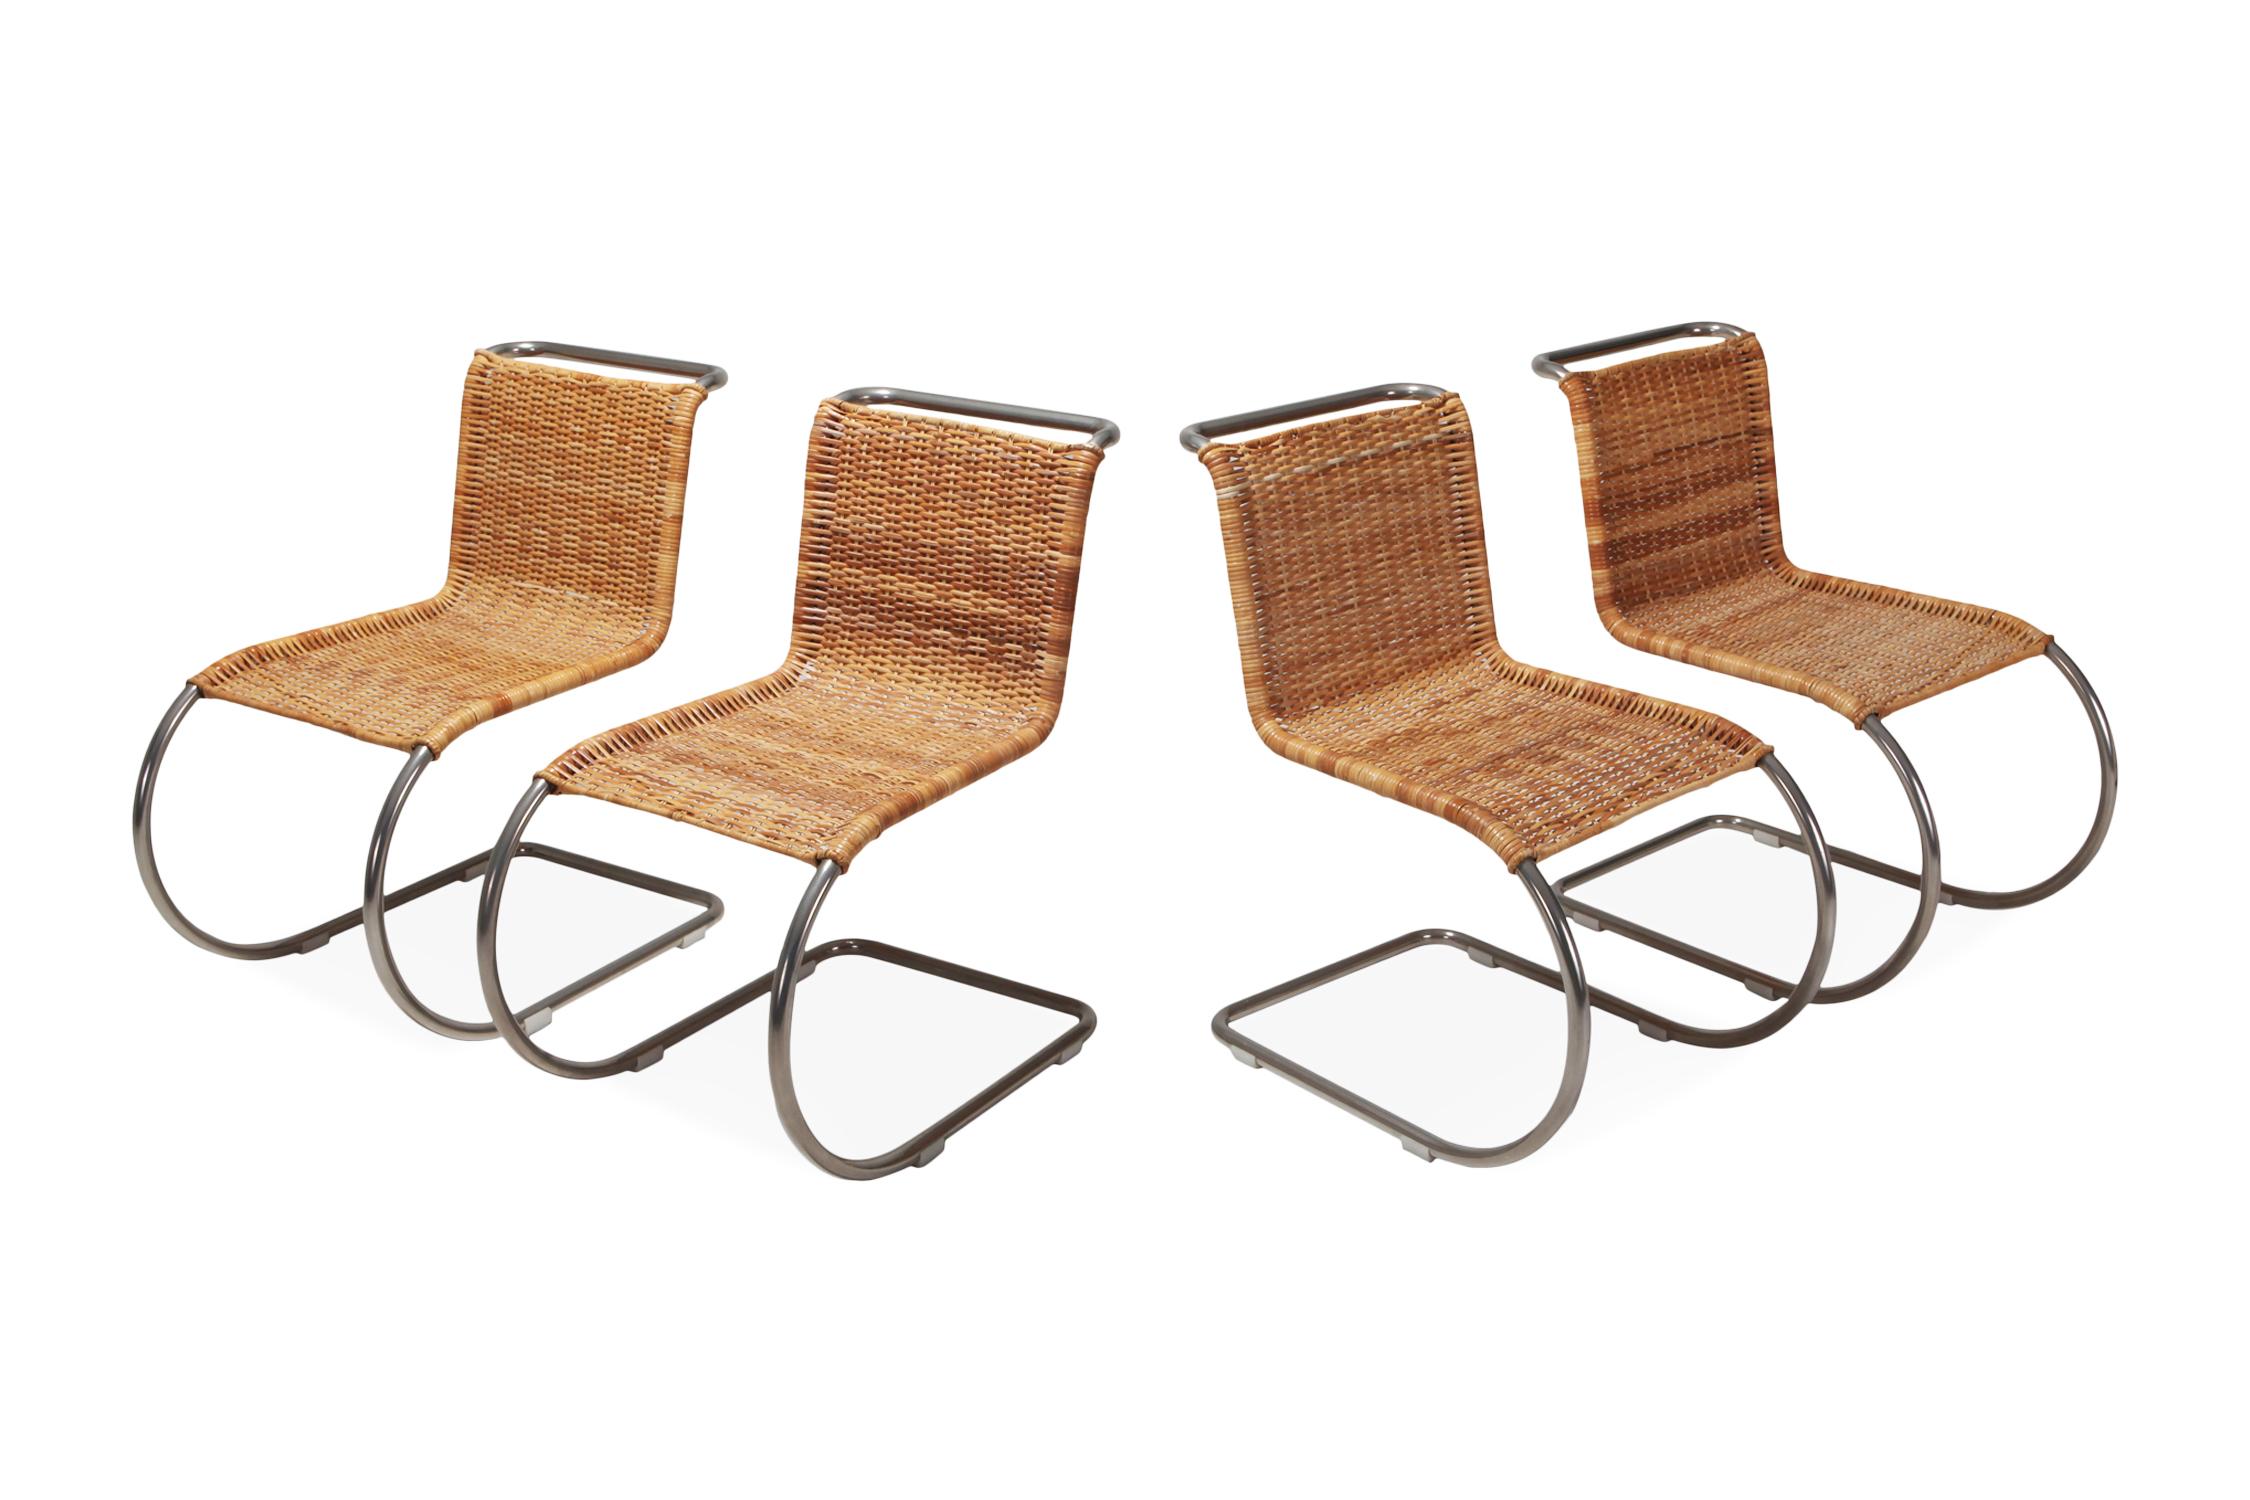 Bauhaus Ludwig Mies van der Rohe Set of Four B42 Weissenhof Chairs by Tecta